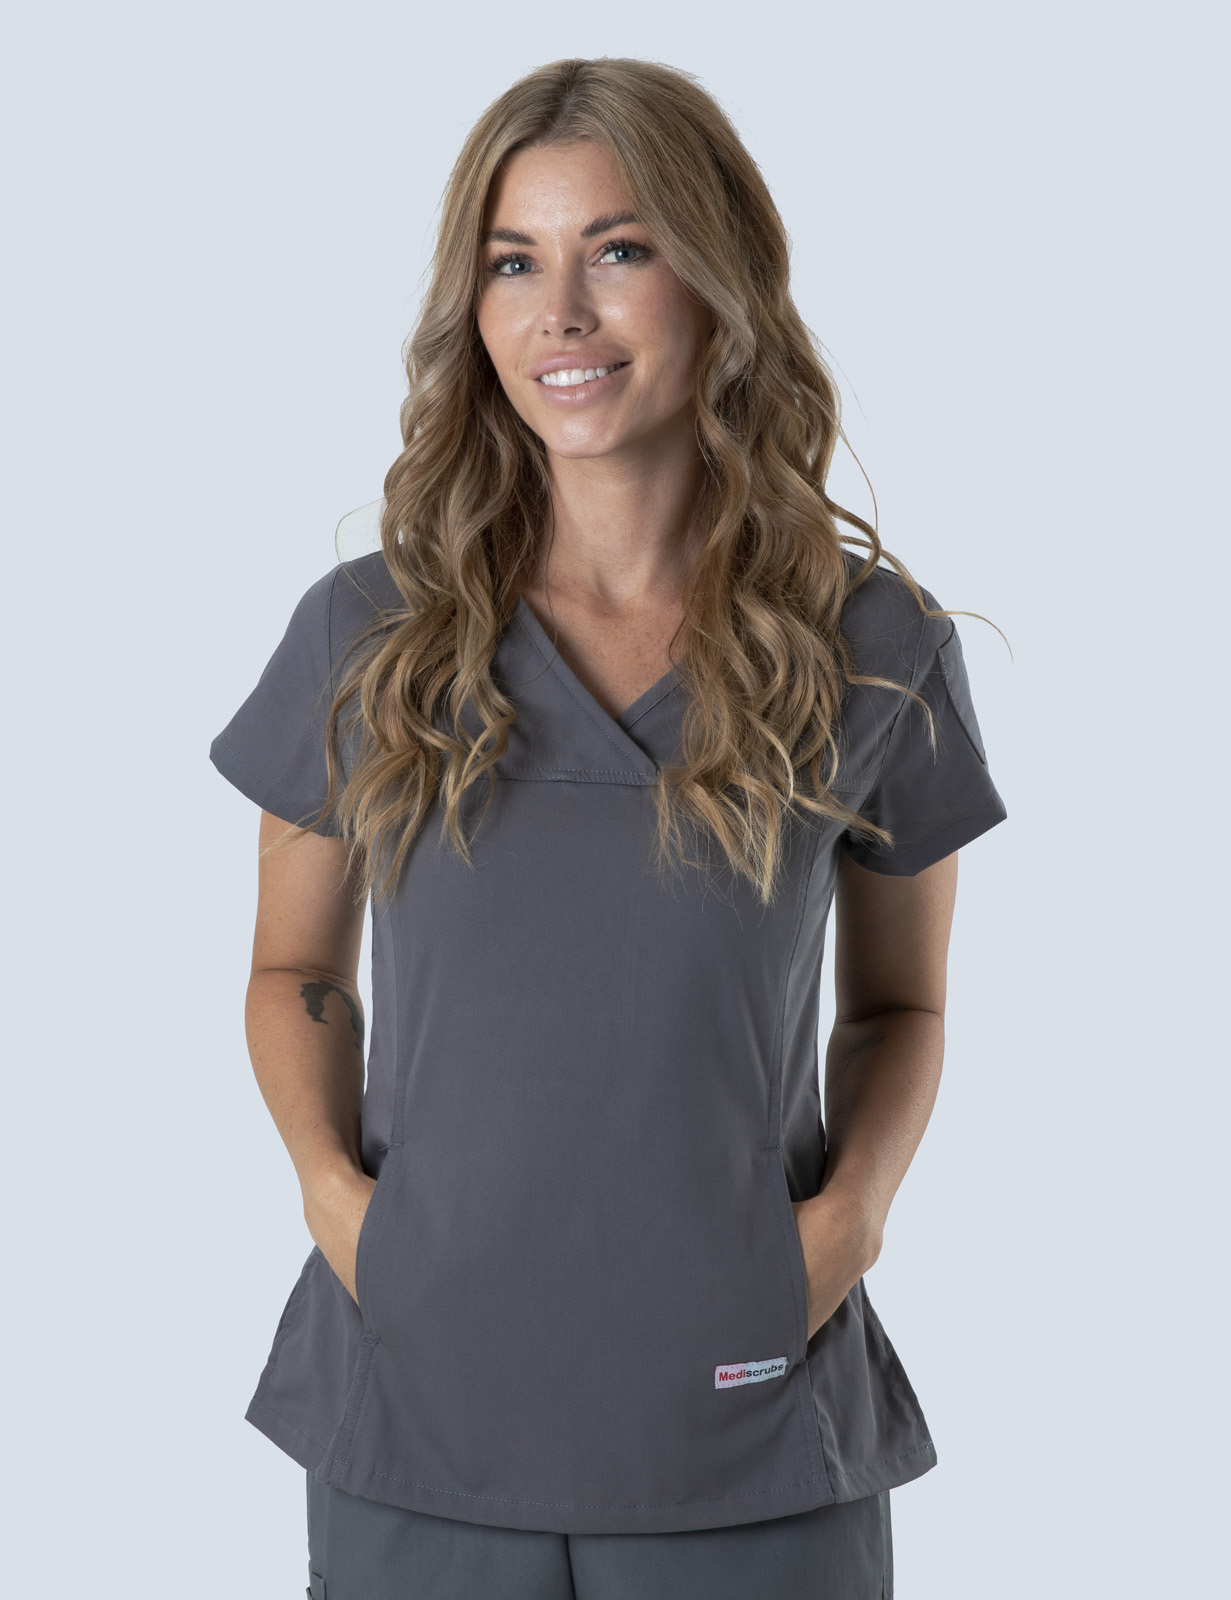 Queensland Children's Hospital Emergency Department Enrolled Nurse Uniform Top Bundle  (Women's Fit Top in Steel Grey incl Logos)